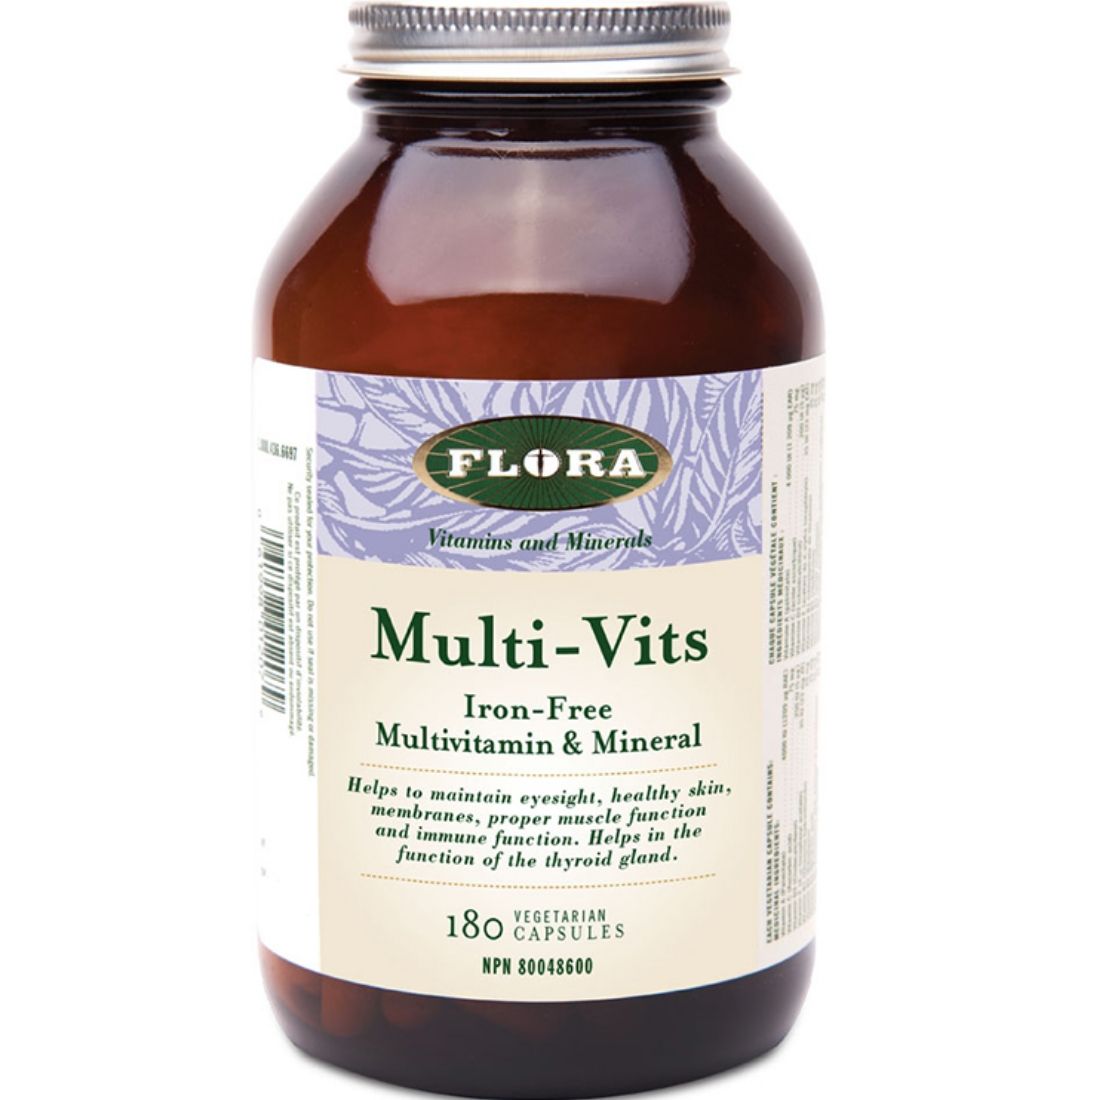 Flora Multi-Vits Iron-Free Multivitamin & Mineral